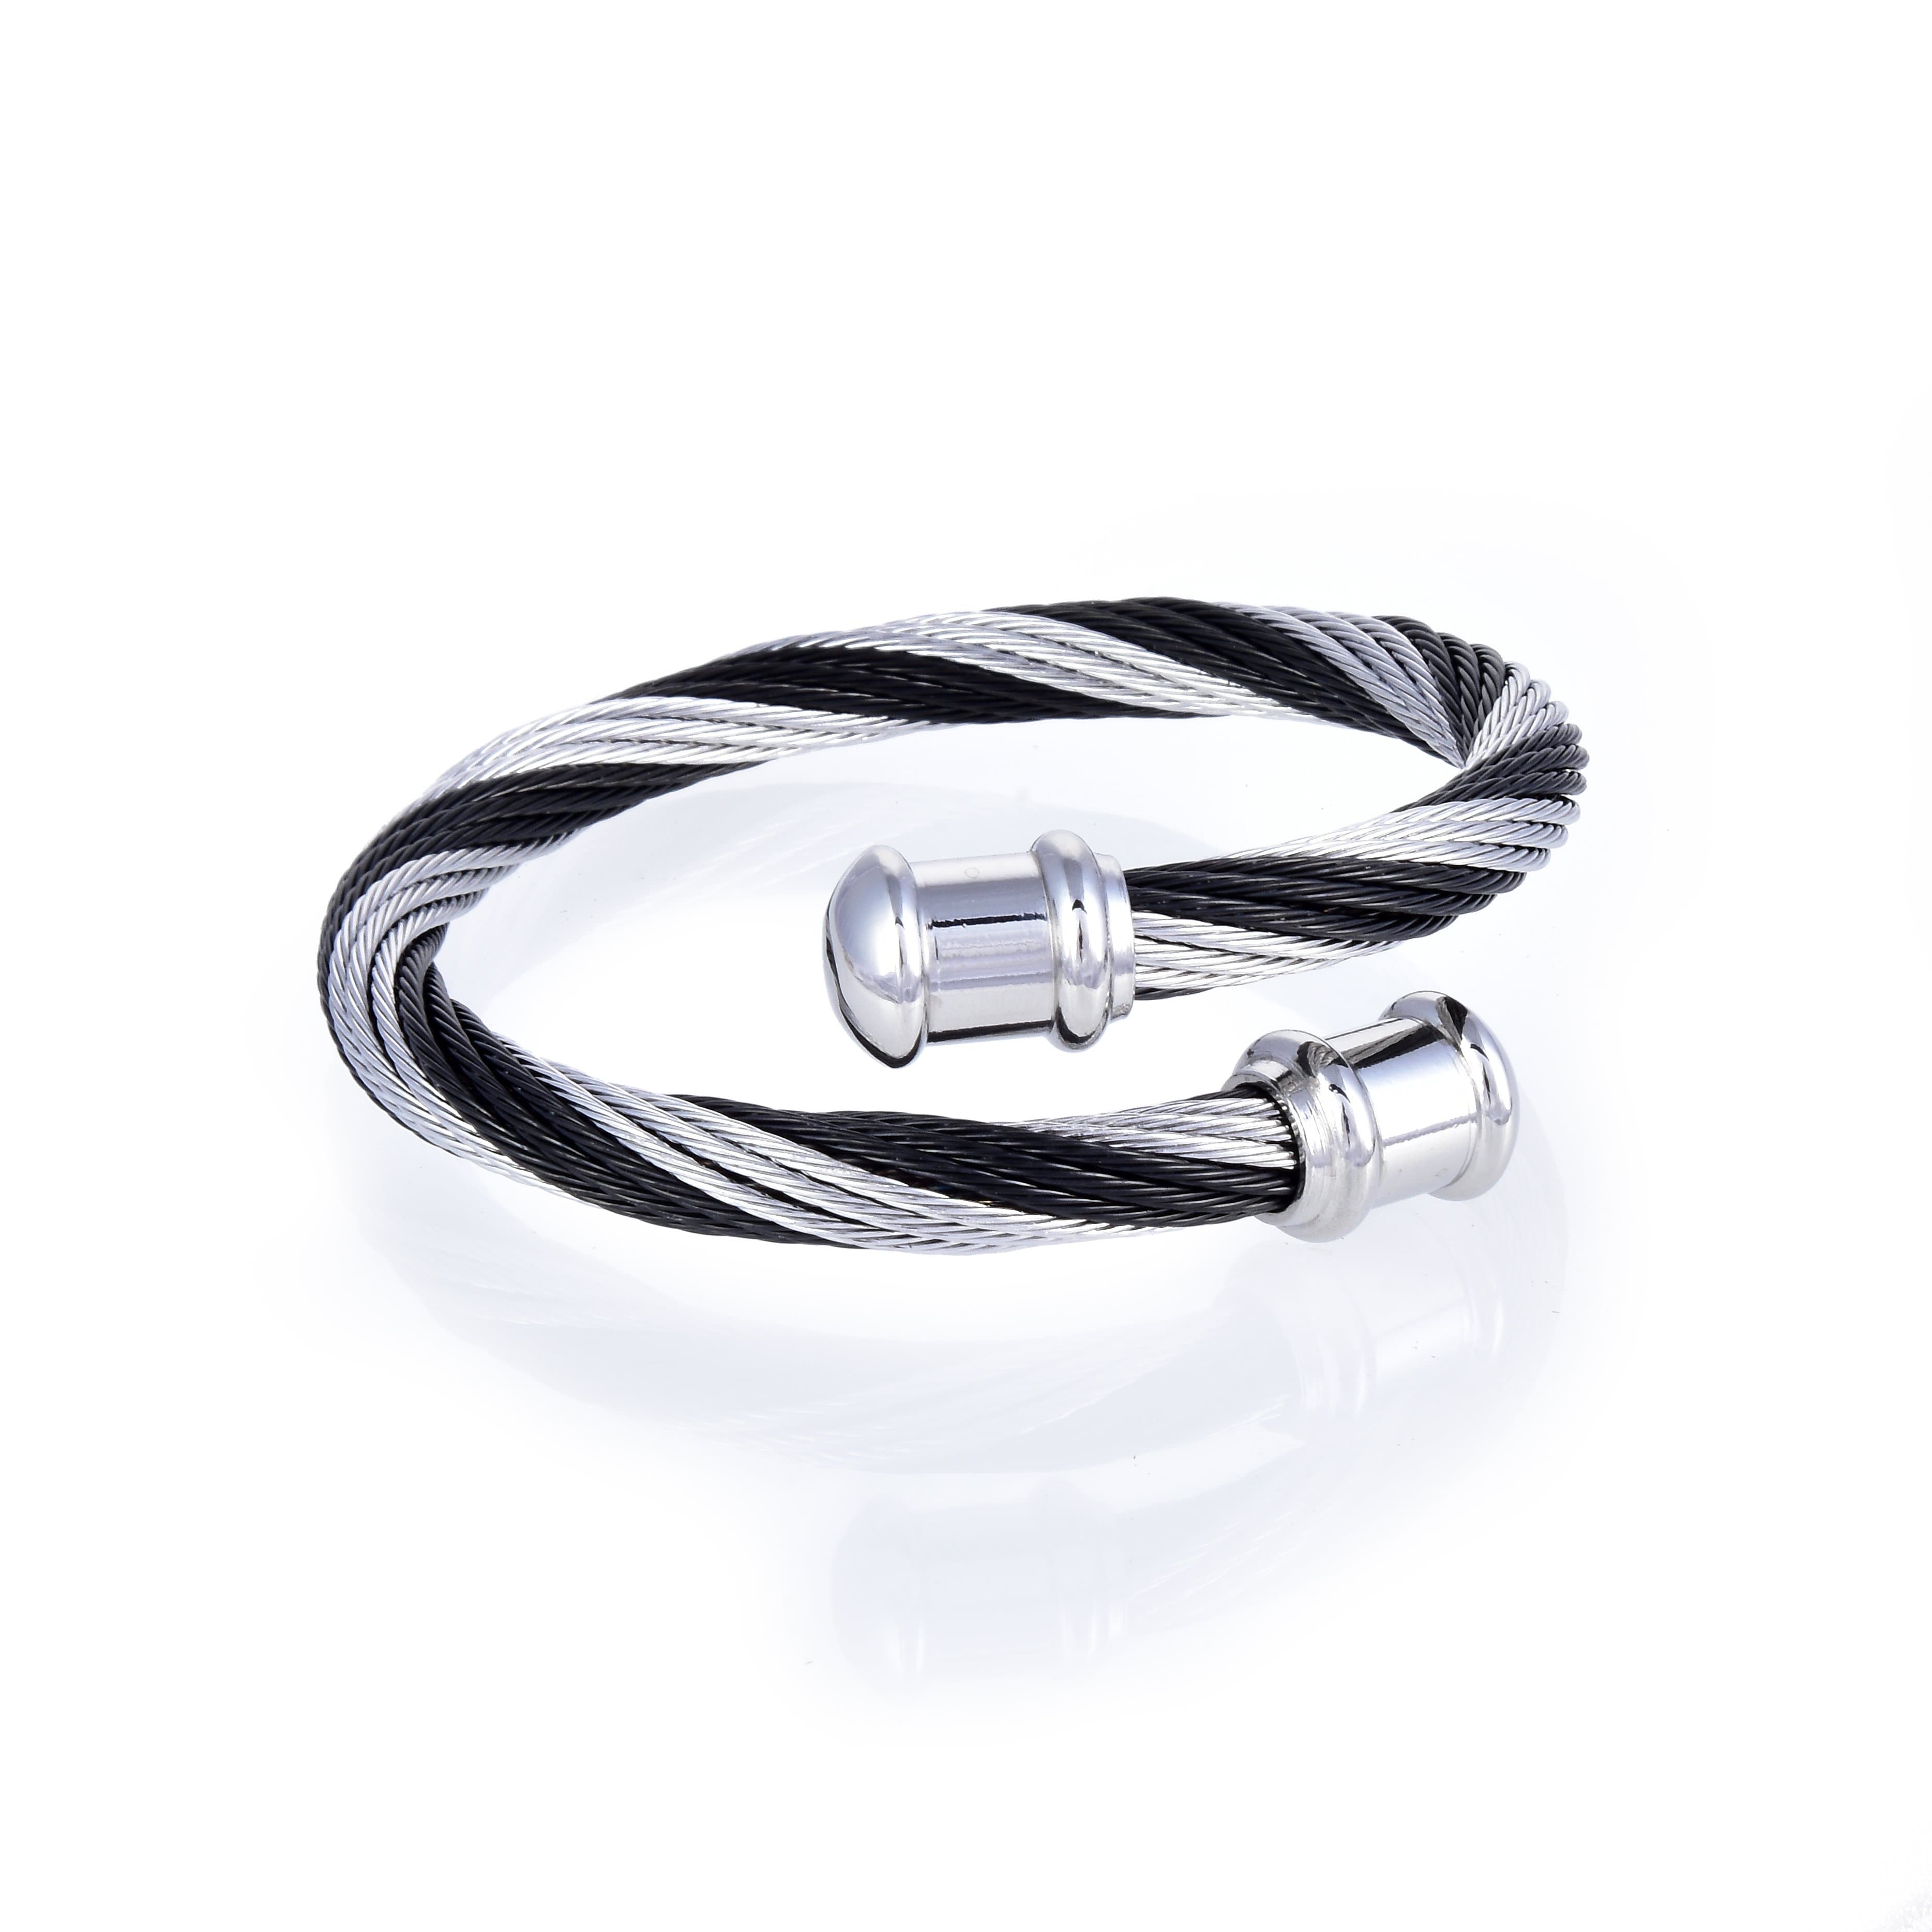 Kalifano Steel Hearts Jewelry Steel Hearts Black and White Swirl Open Bangle Bracelet SHB200-17